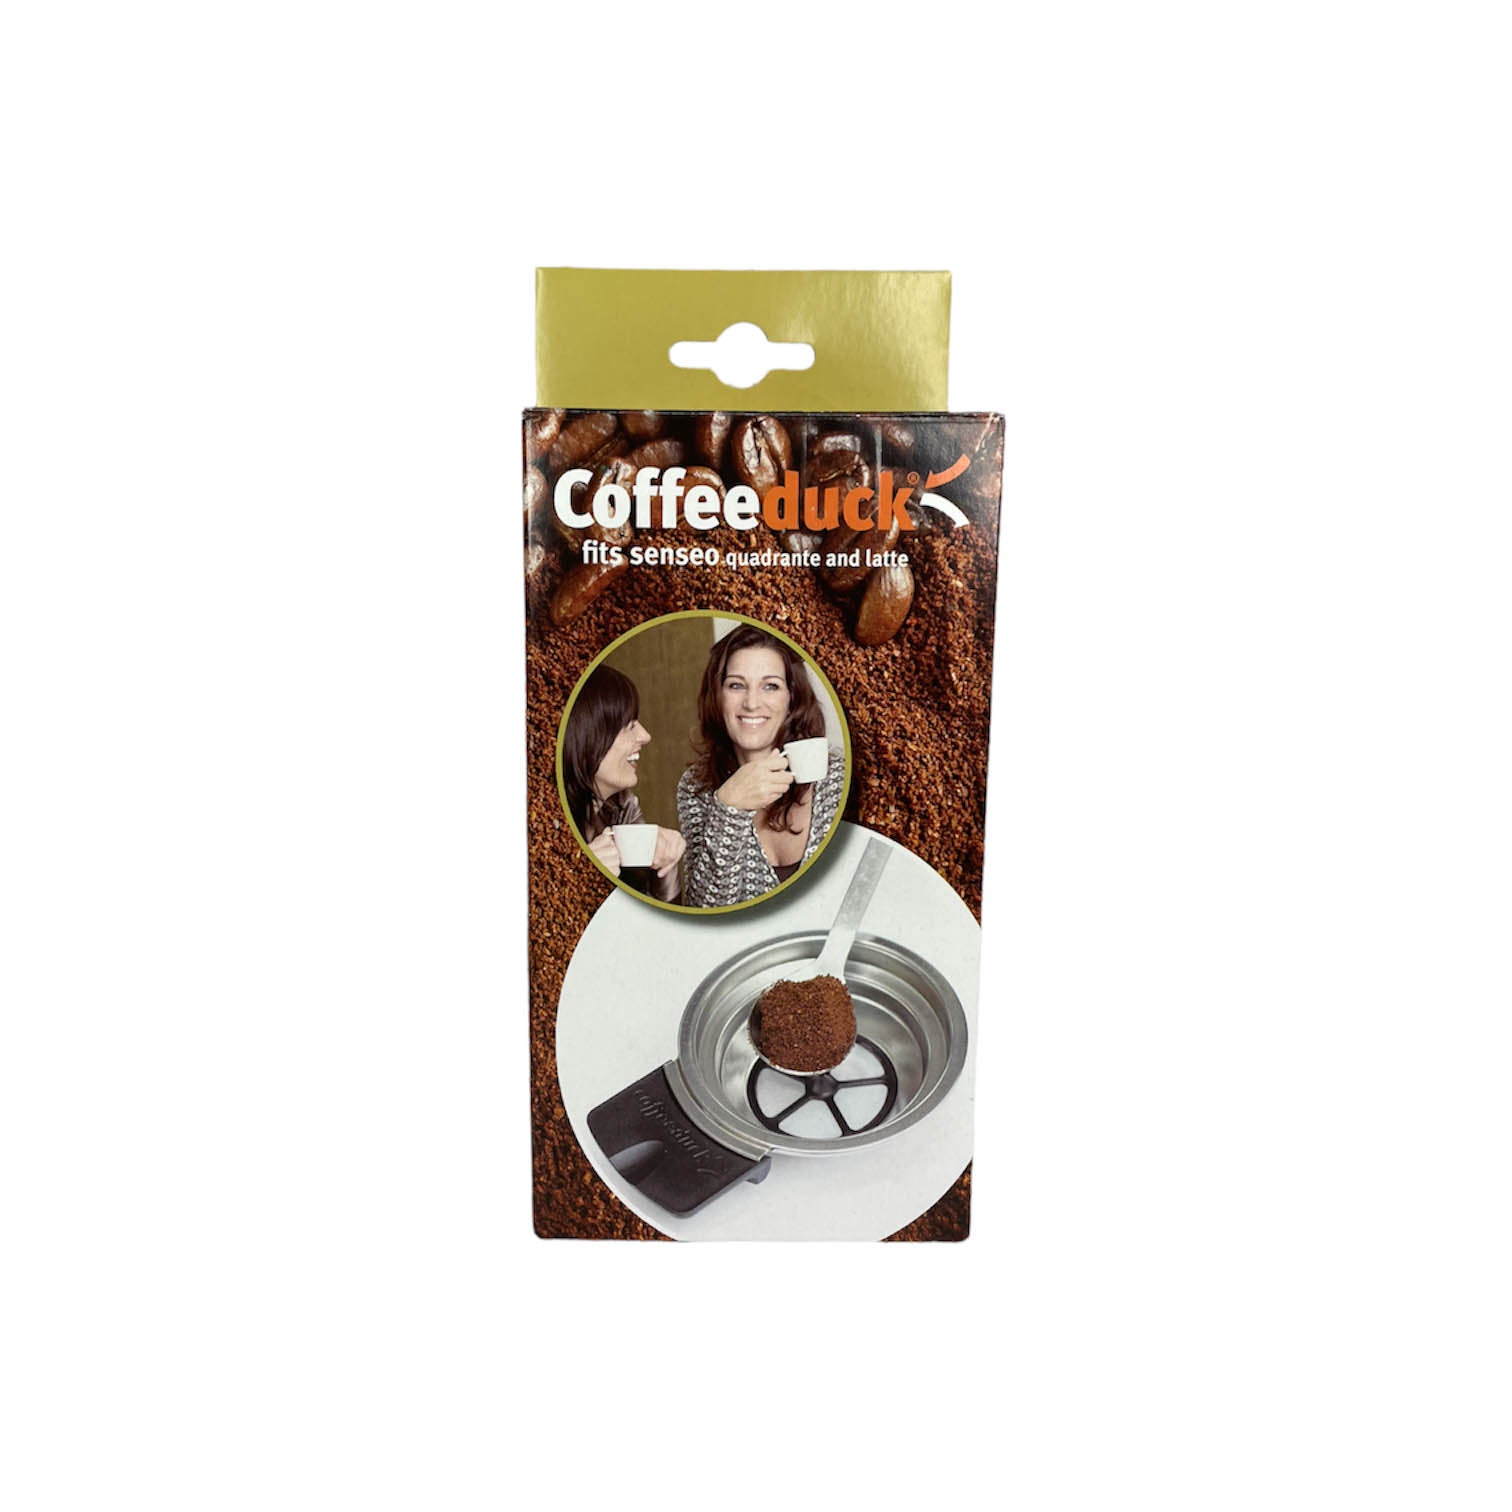 Refillable Coffee Pod for Senseo Quadrante & Latte, B2B